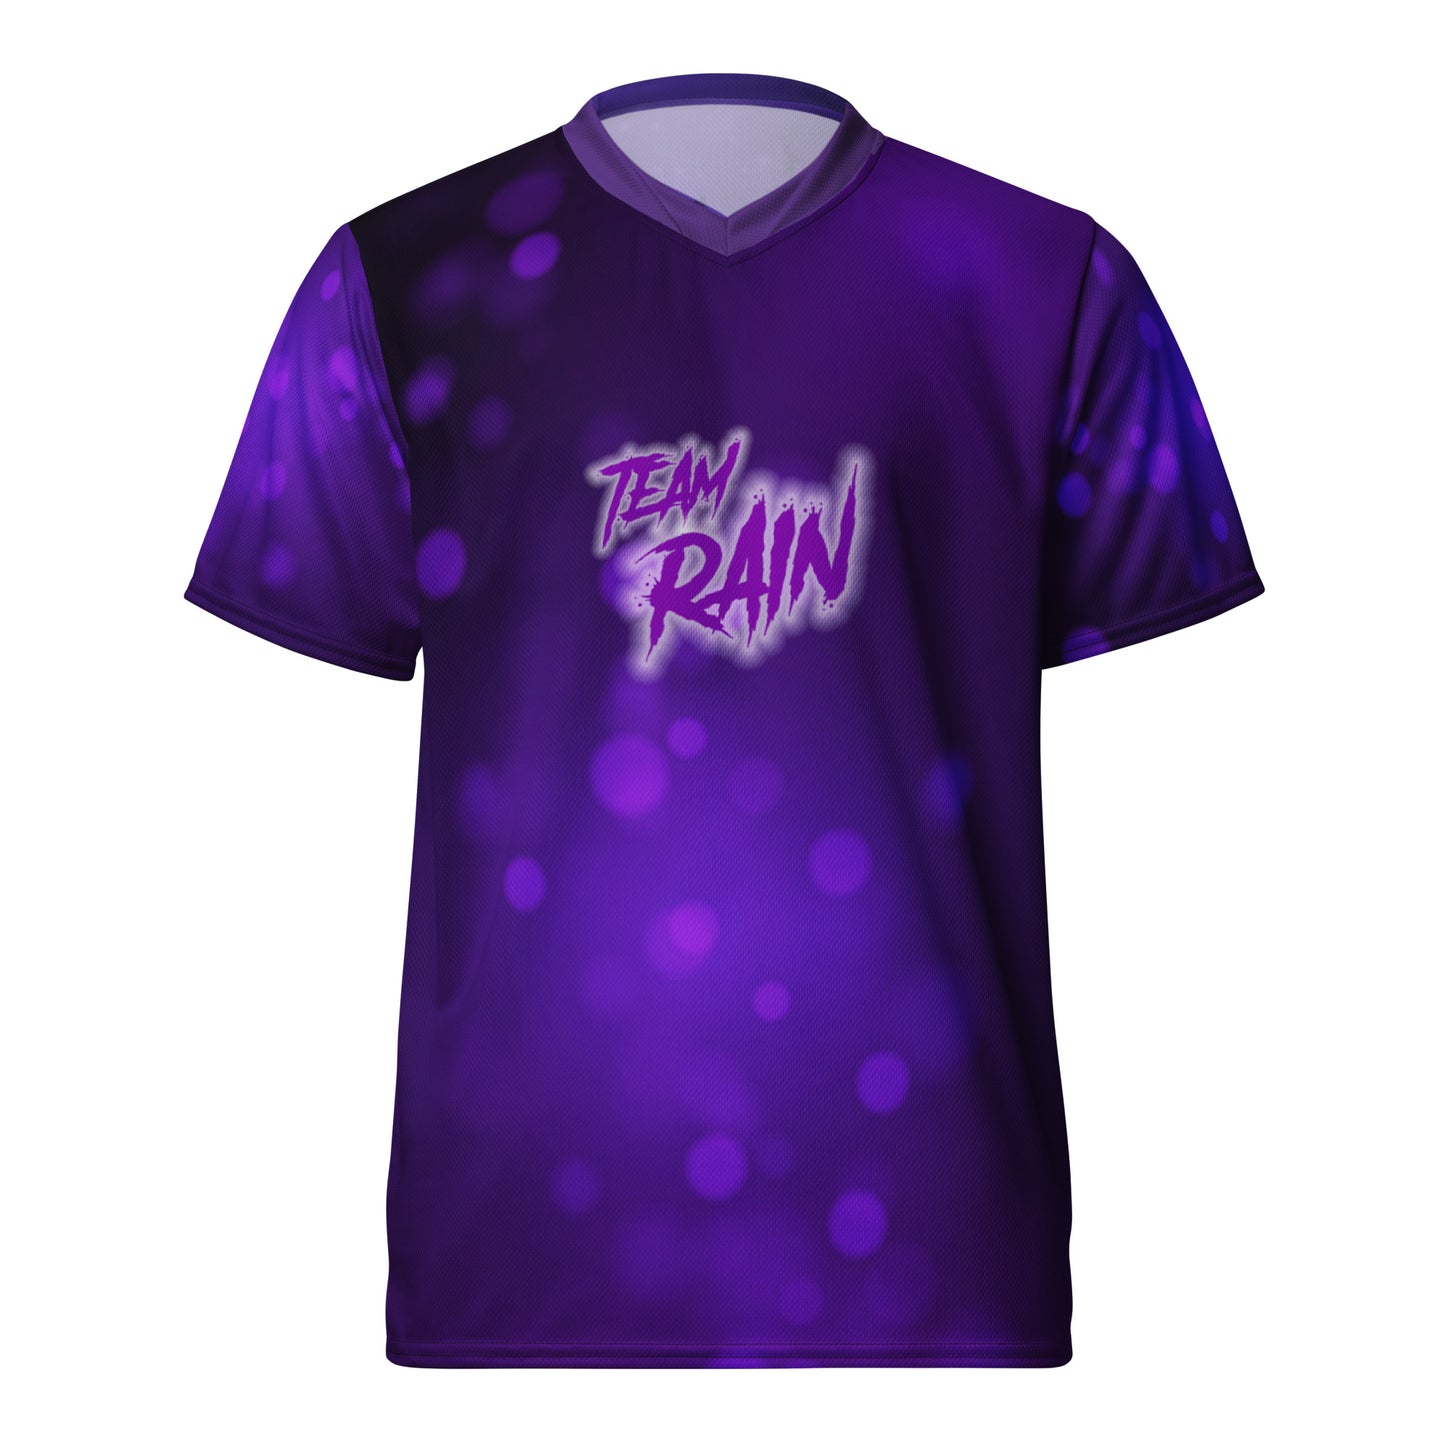 RAIN - Purple Recycled unisex sports jersey